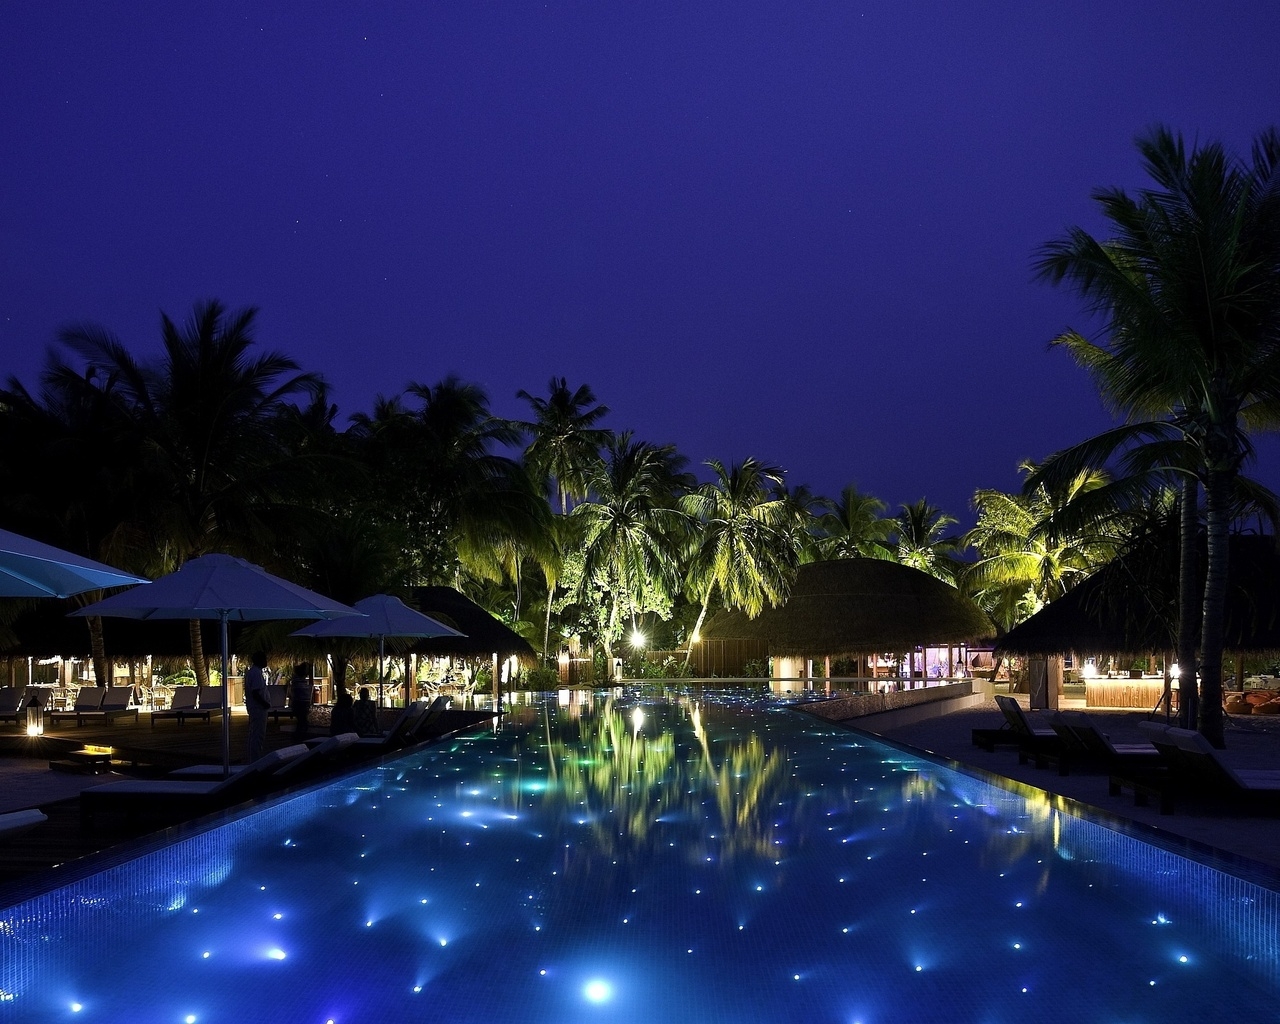 Resort Night View for 1280 x 1024 resolution